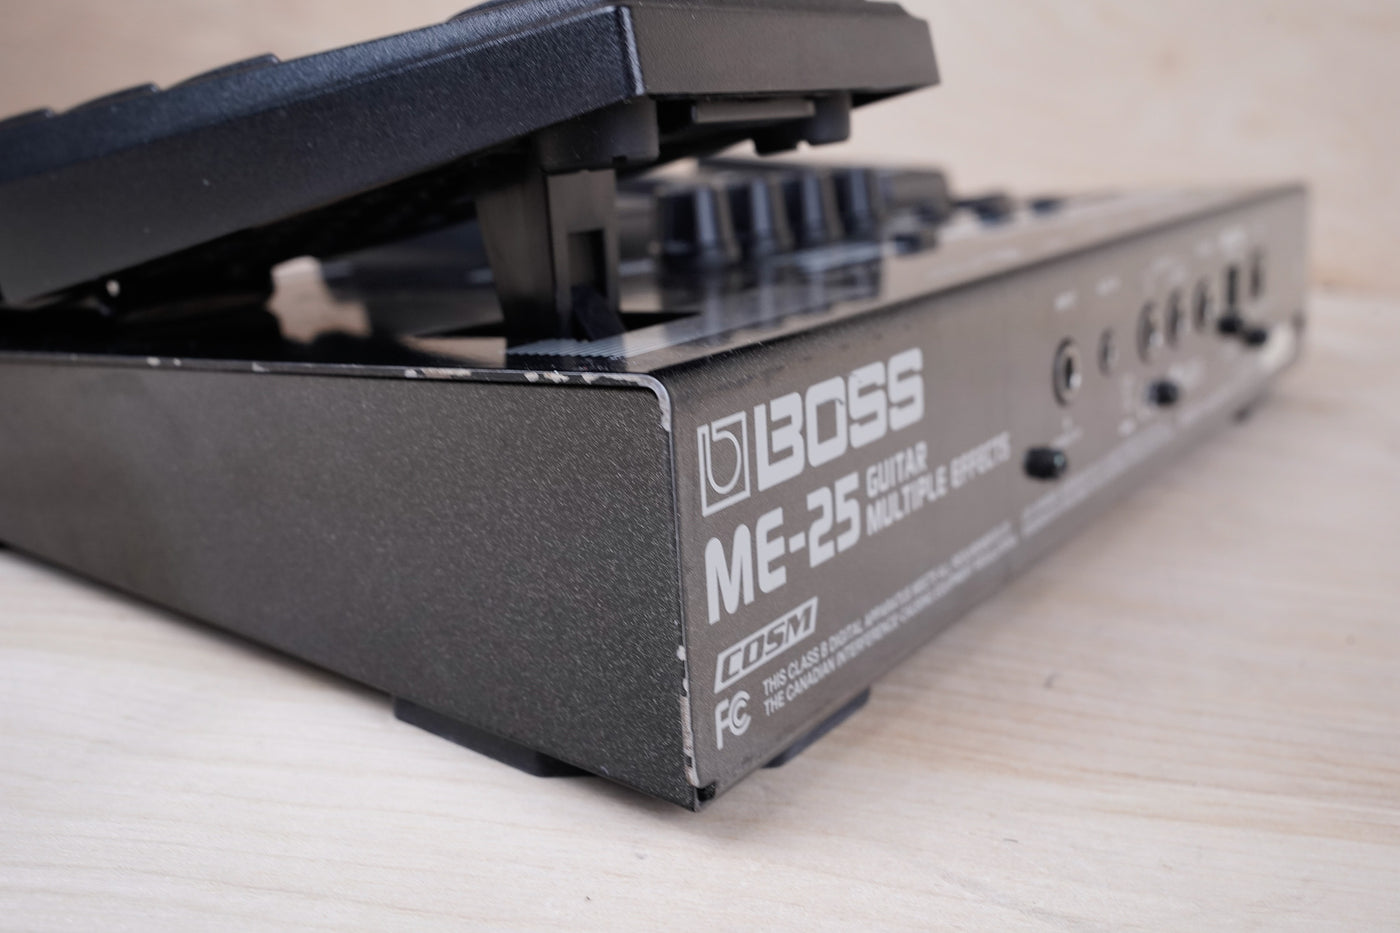 Boss ME-25 Guitar Multi-Effect Unit Black w/ Power Adapter